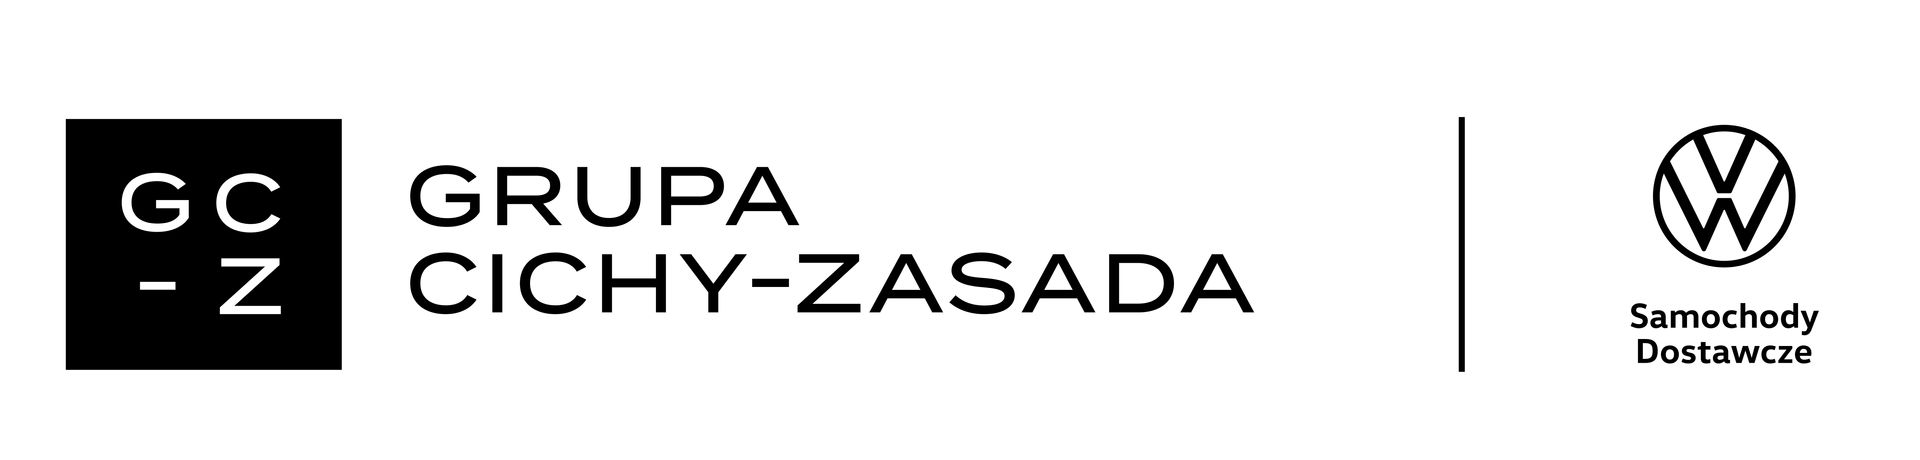 Grupa Cichy - Zasada oddział Kraków top banner